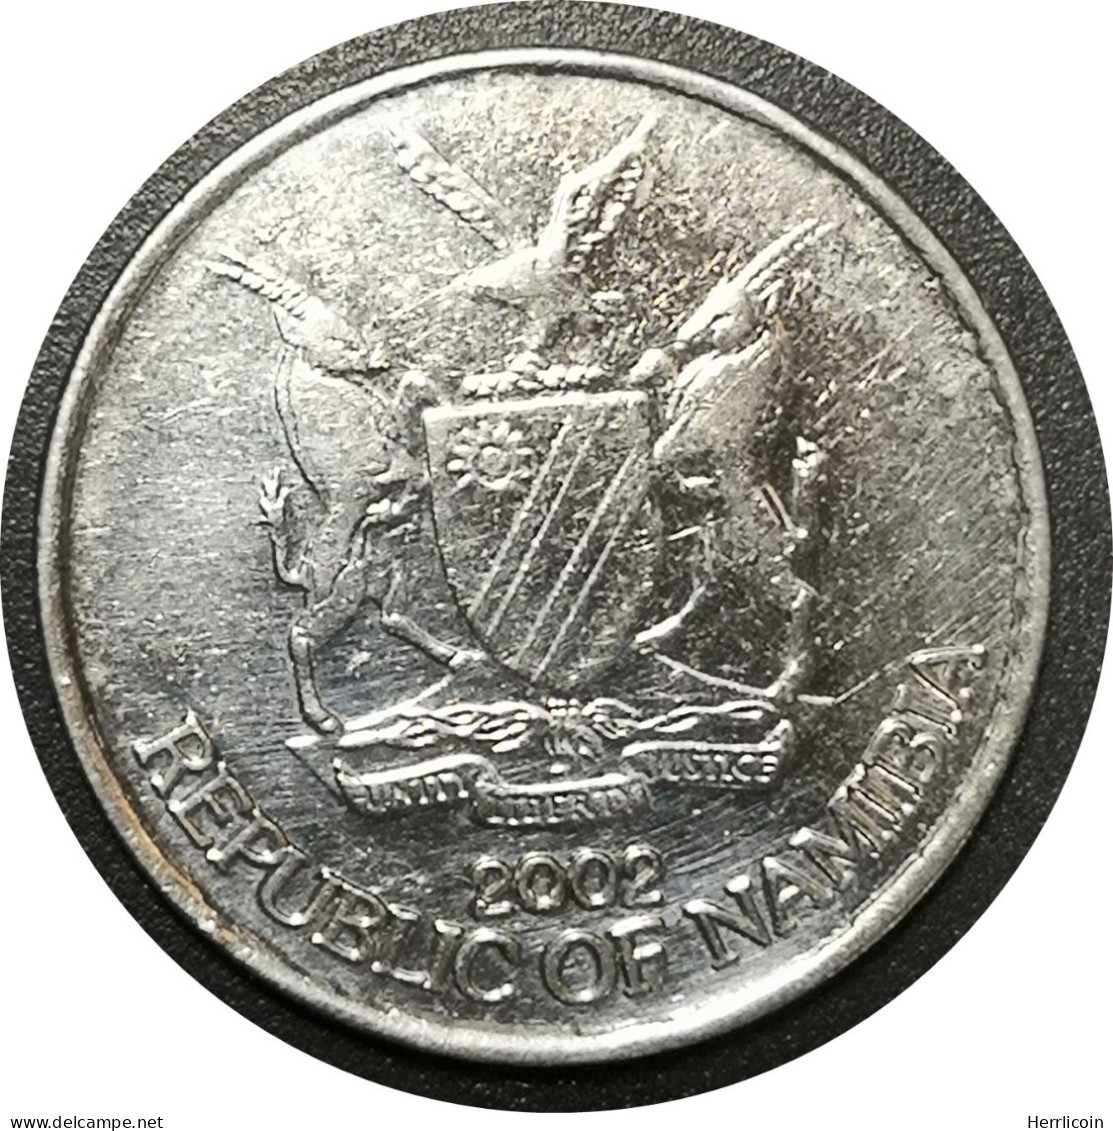 Monnaie Namibie - 2002 - 10 Cents - Namibia